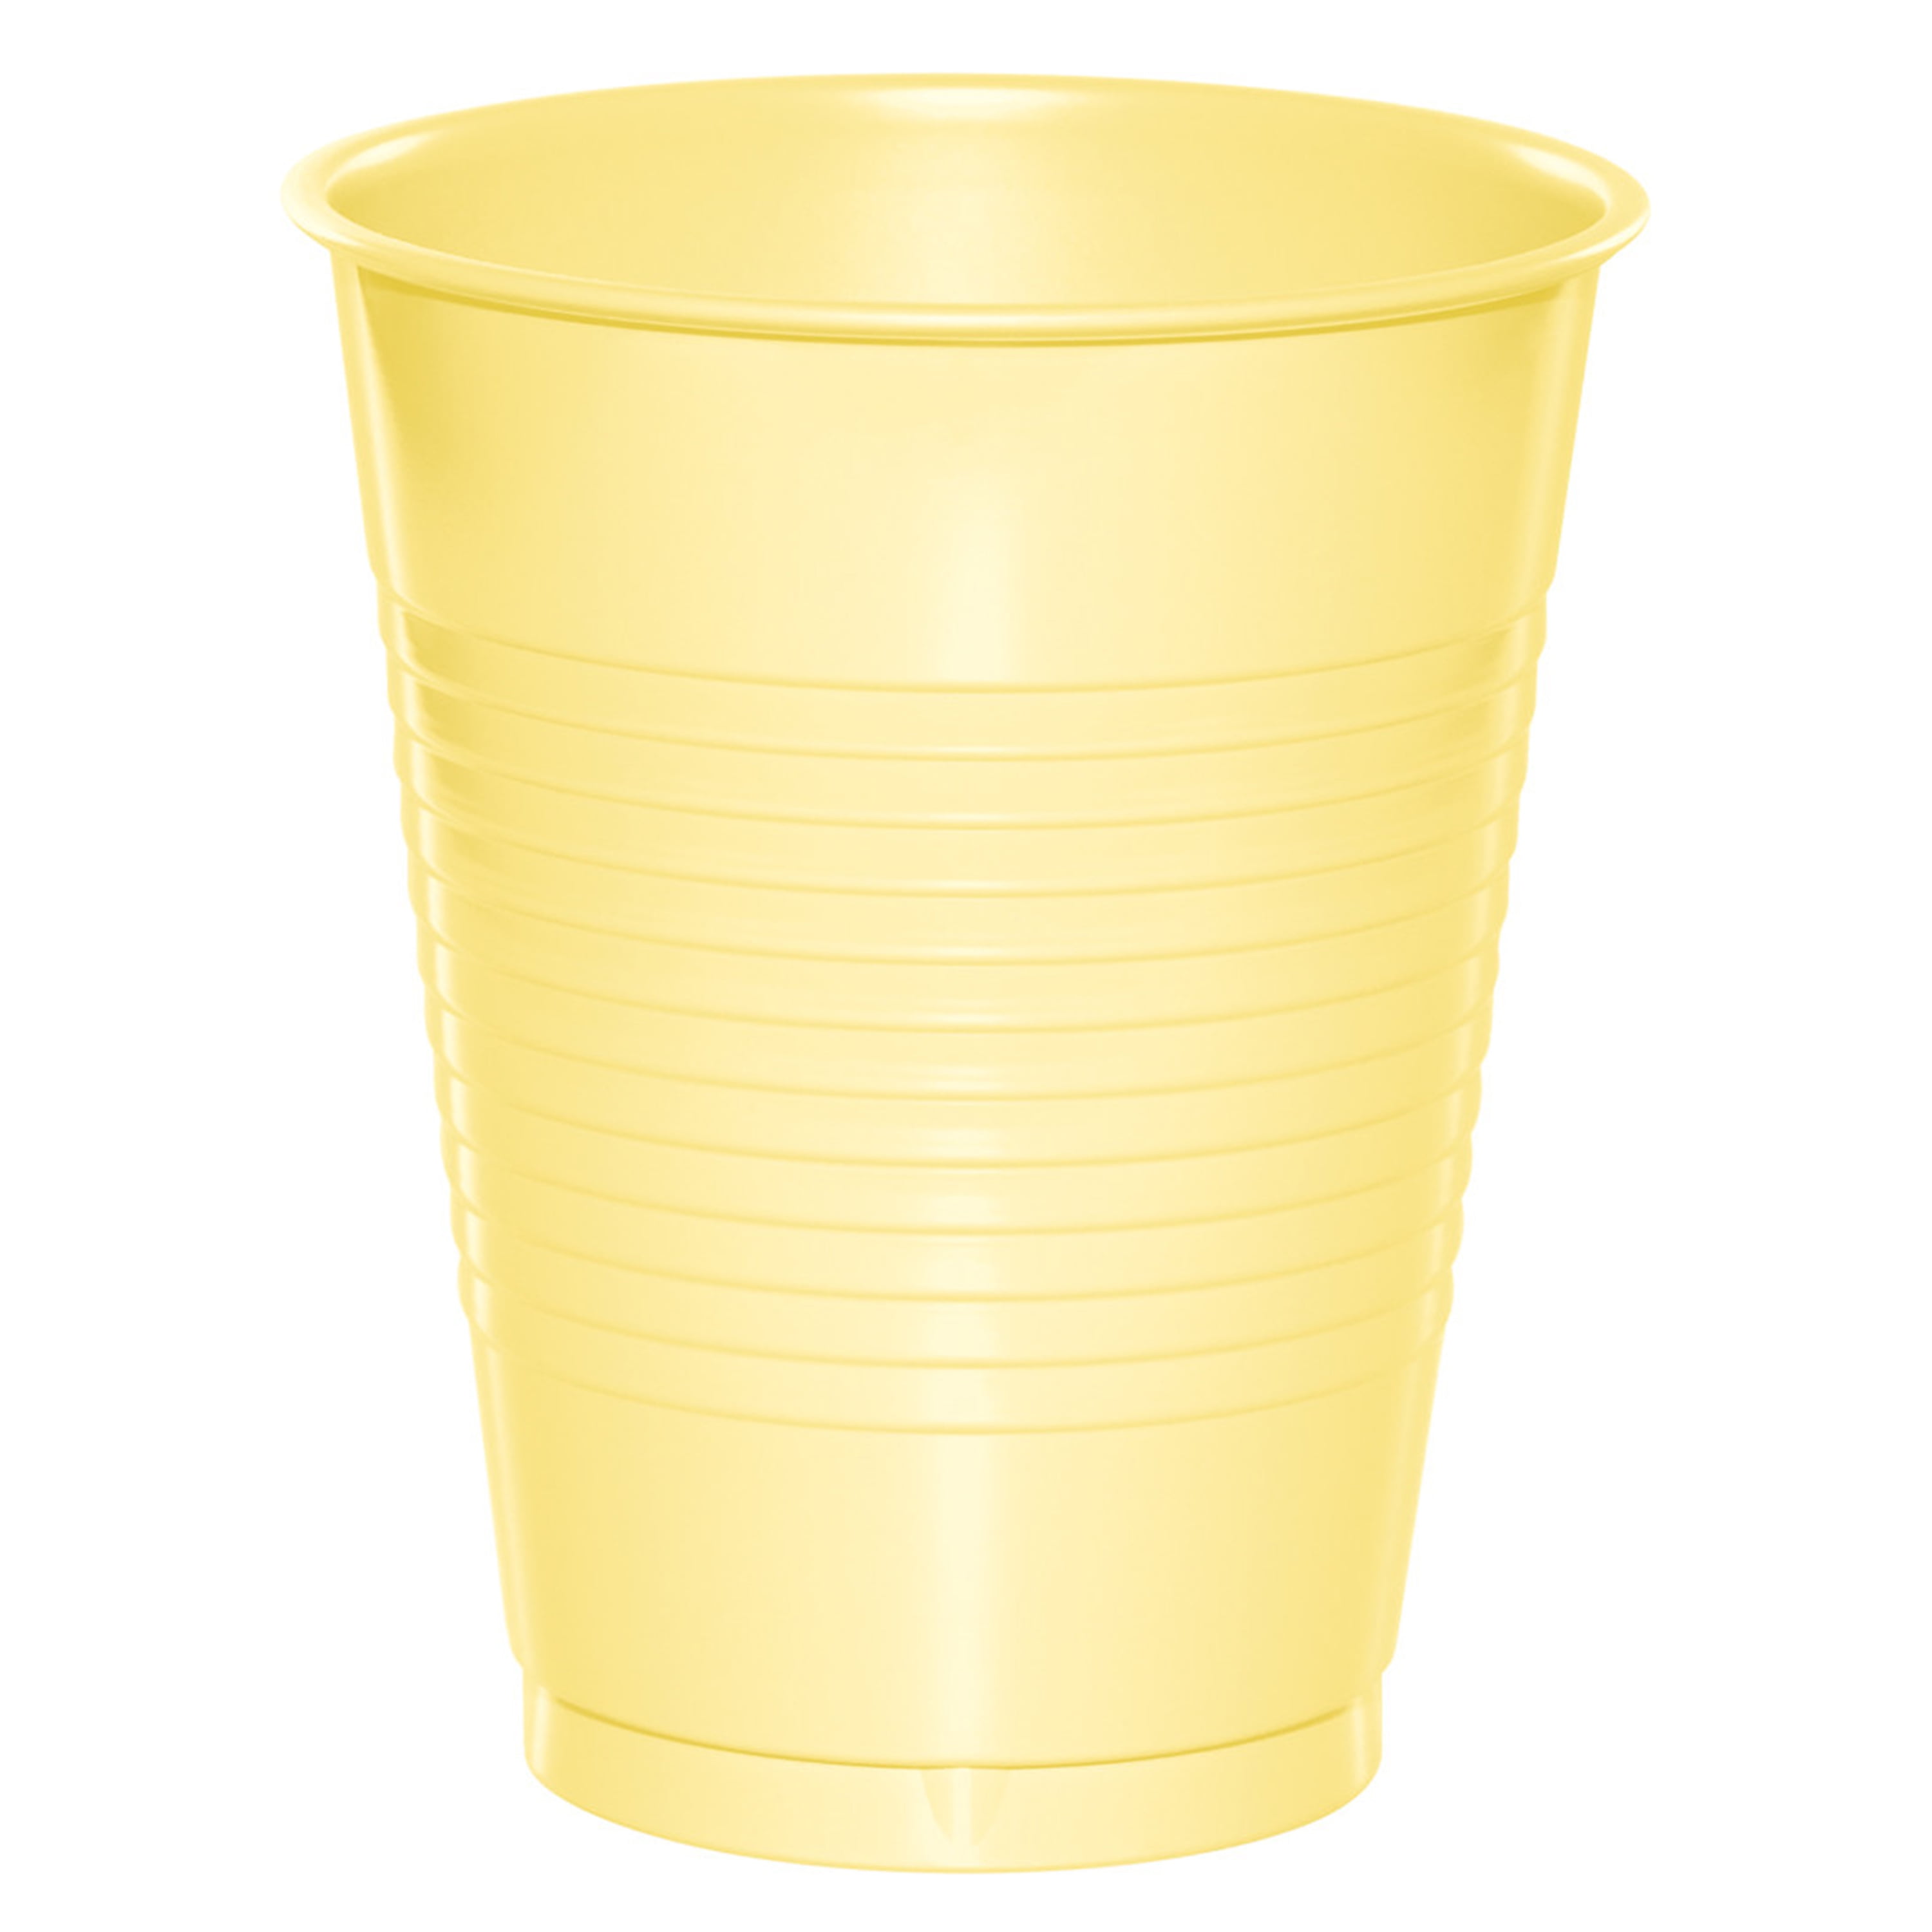  cssopenss 120 pcs 16 oz Yellow plastic cups 16 oz